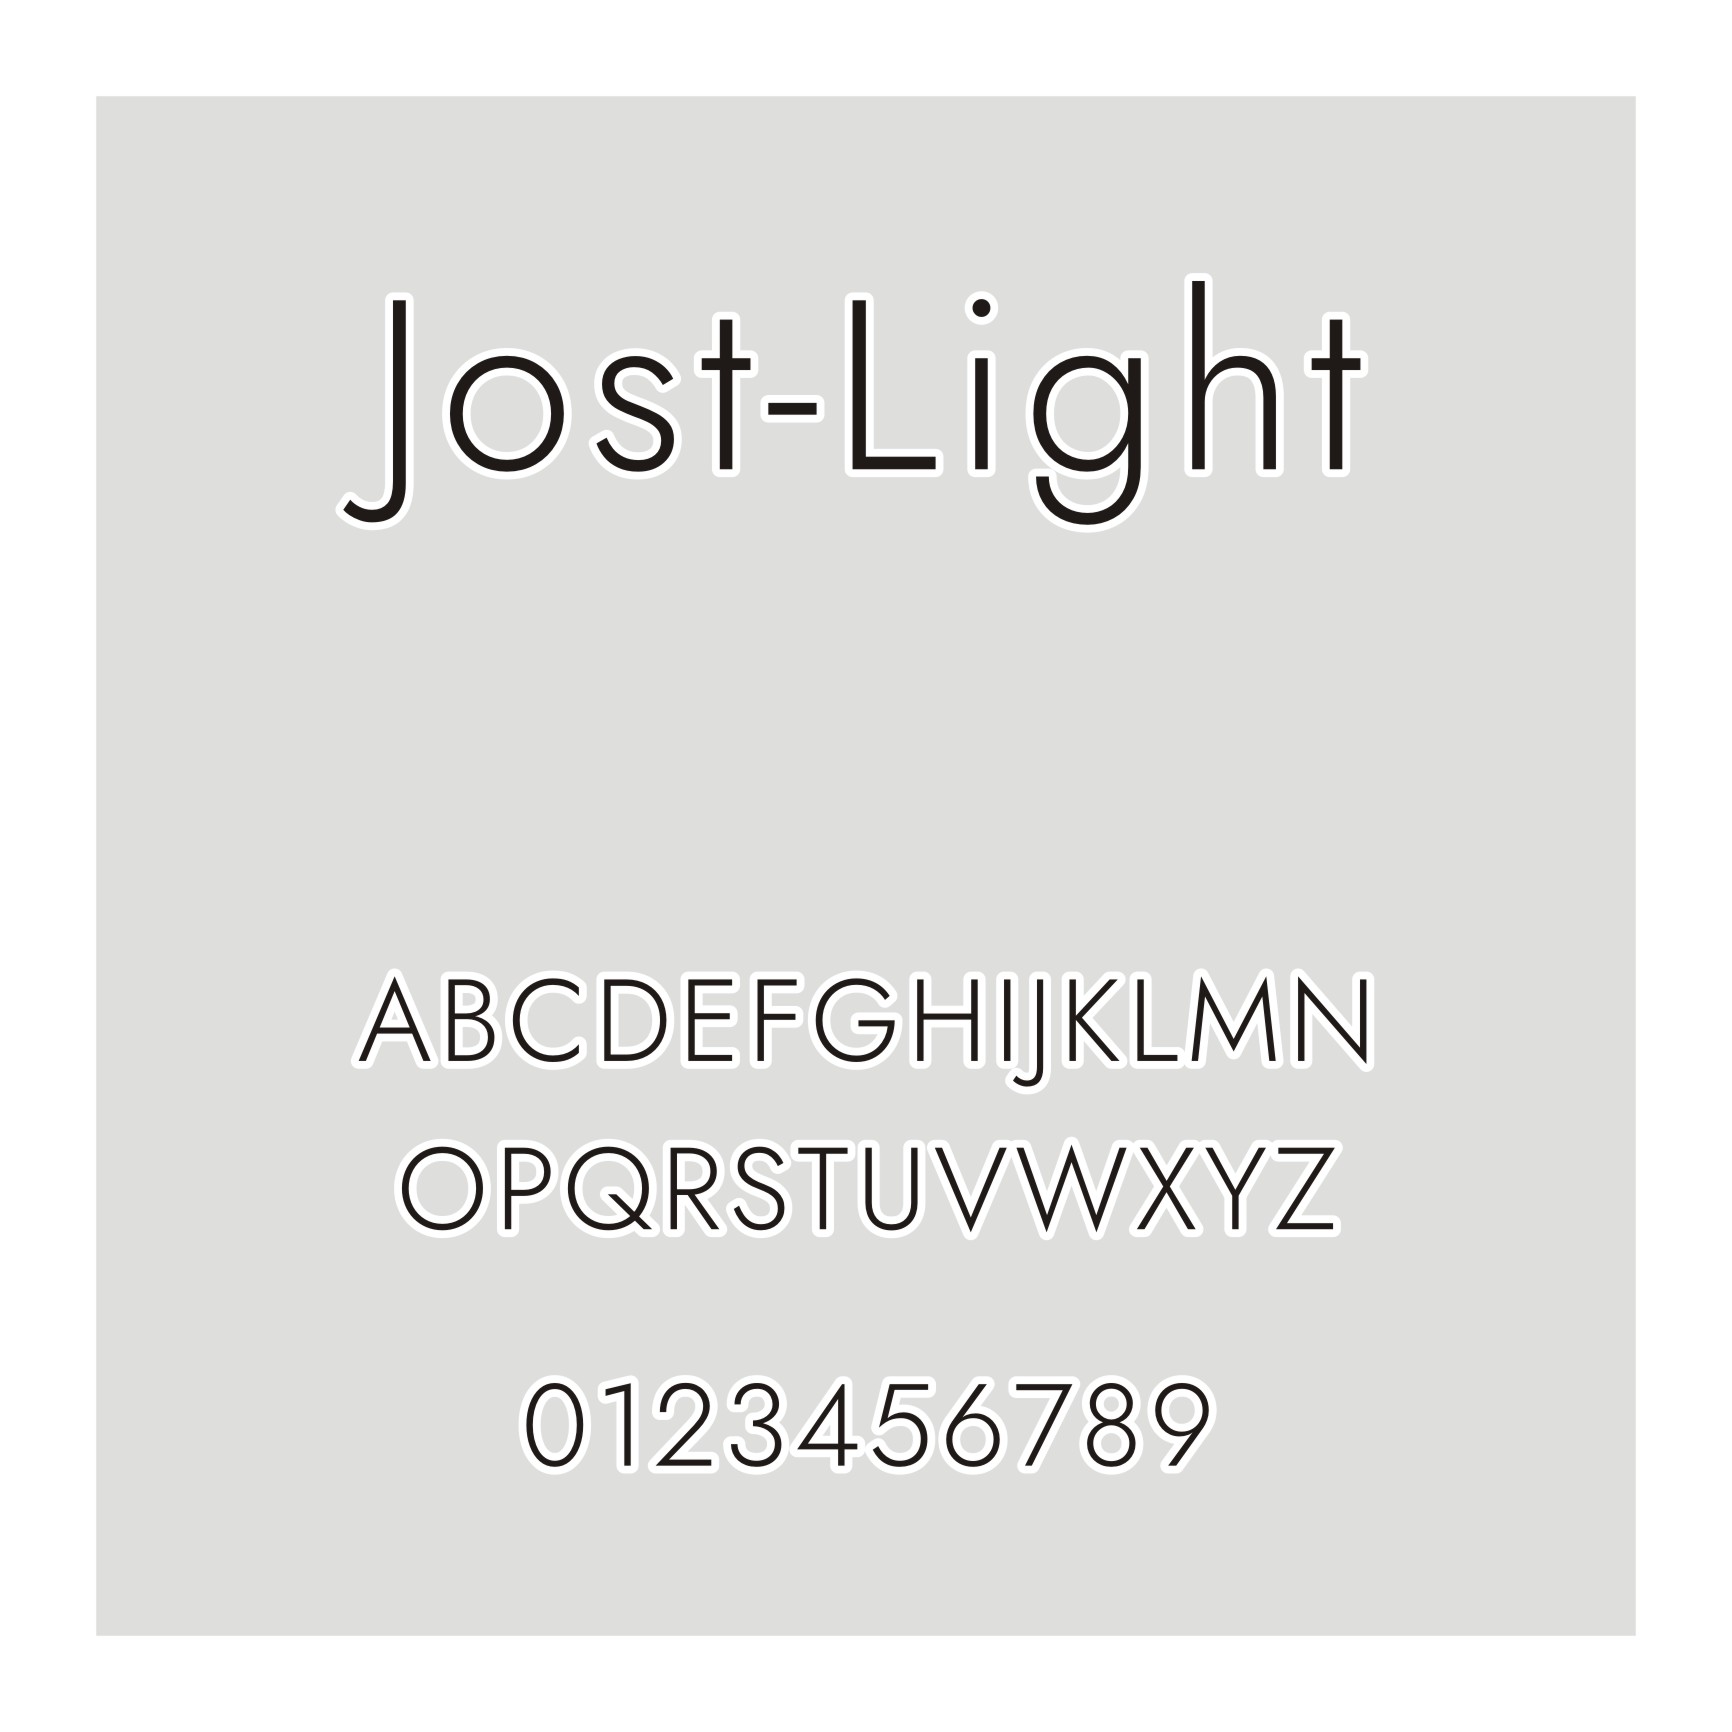 Jost-Light